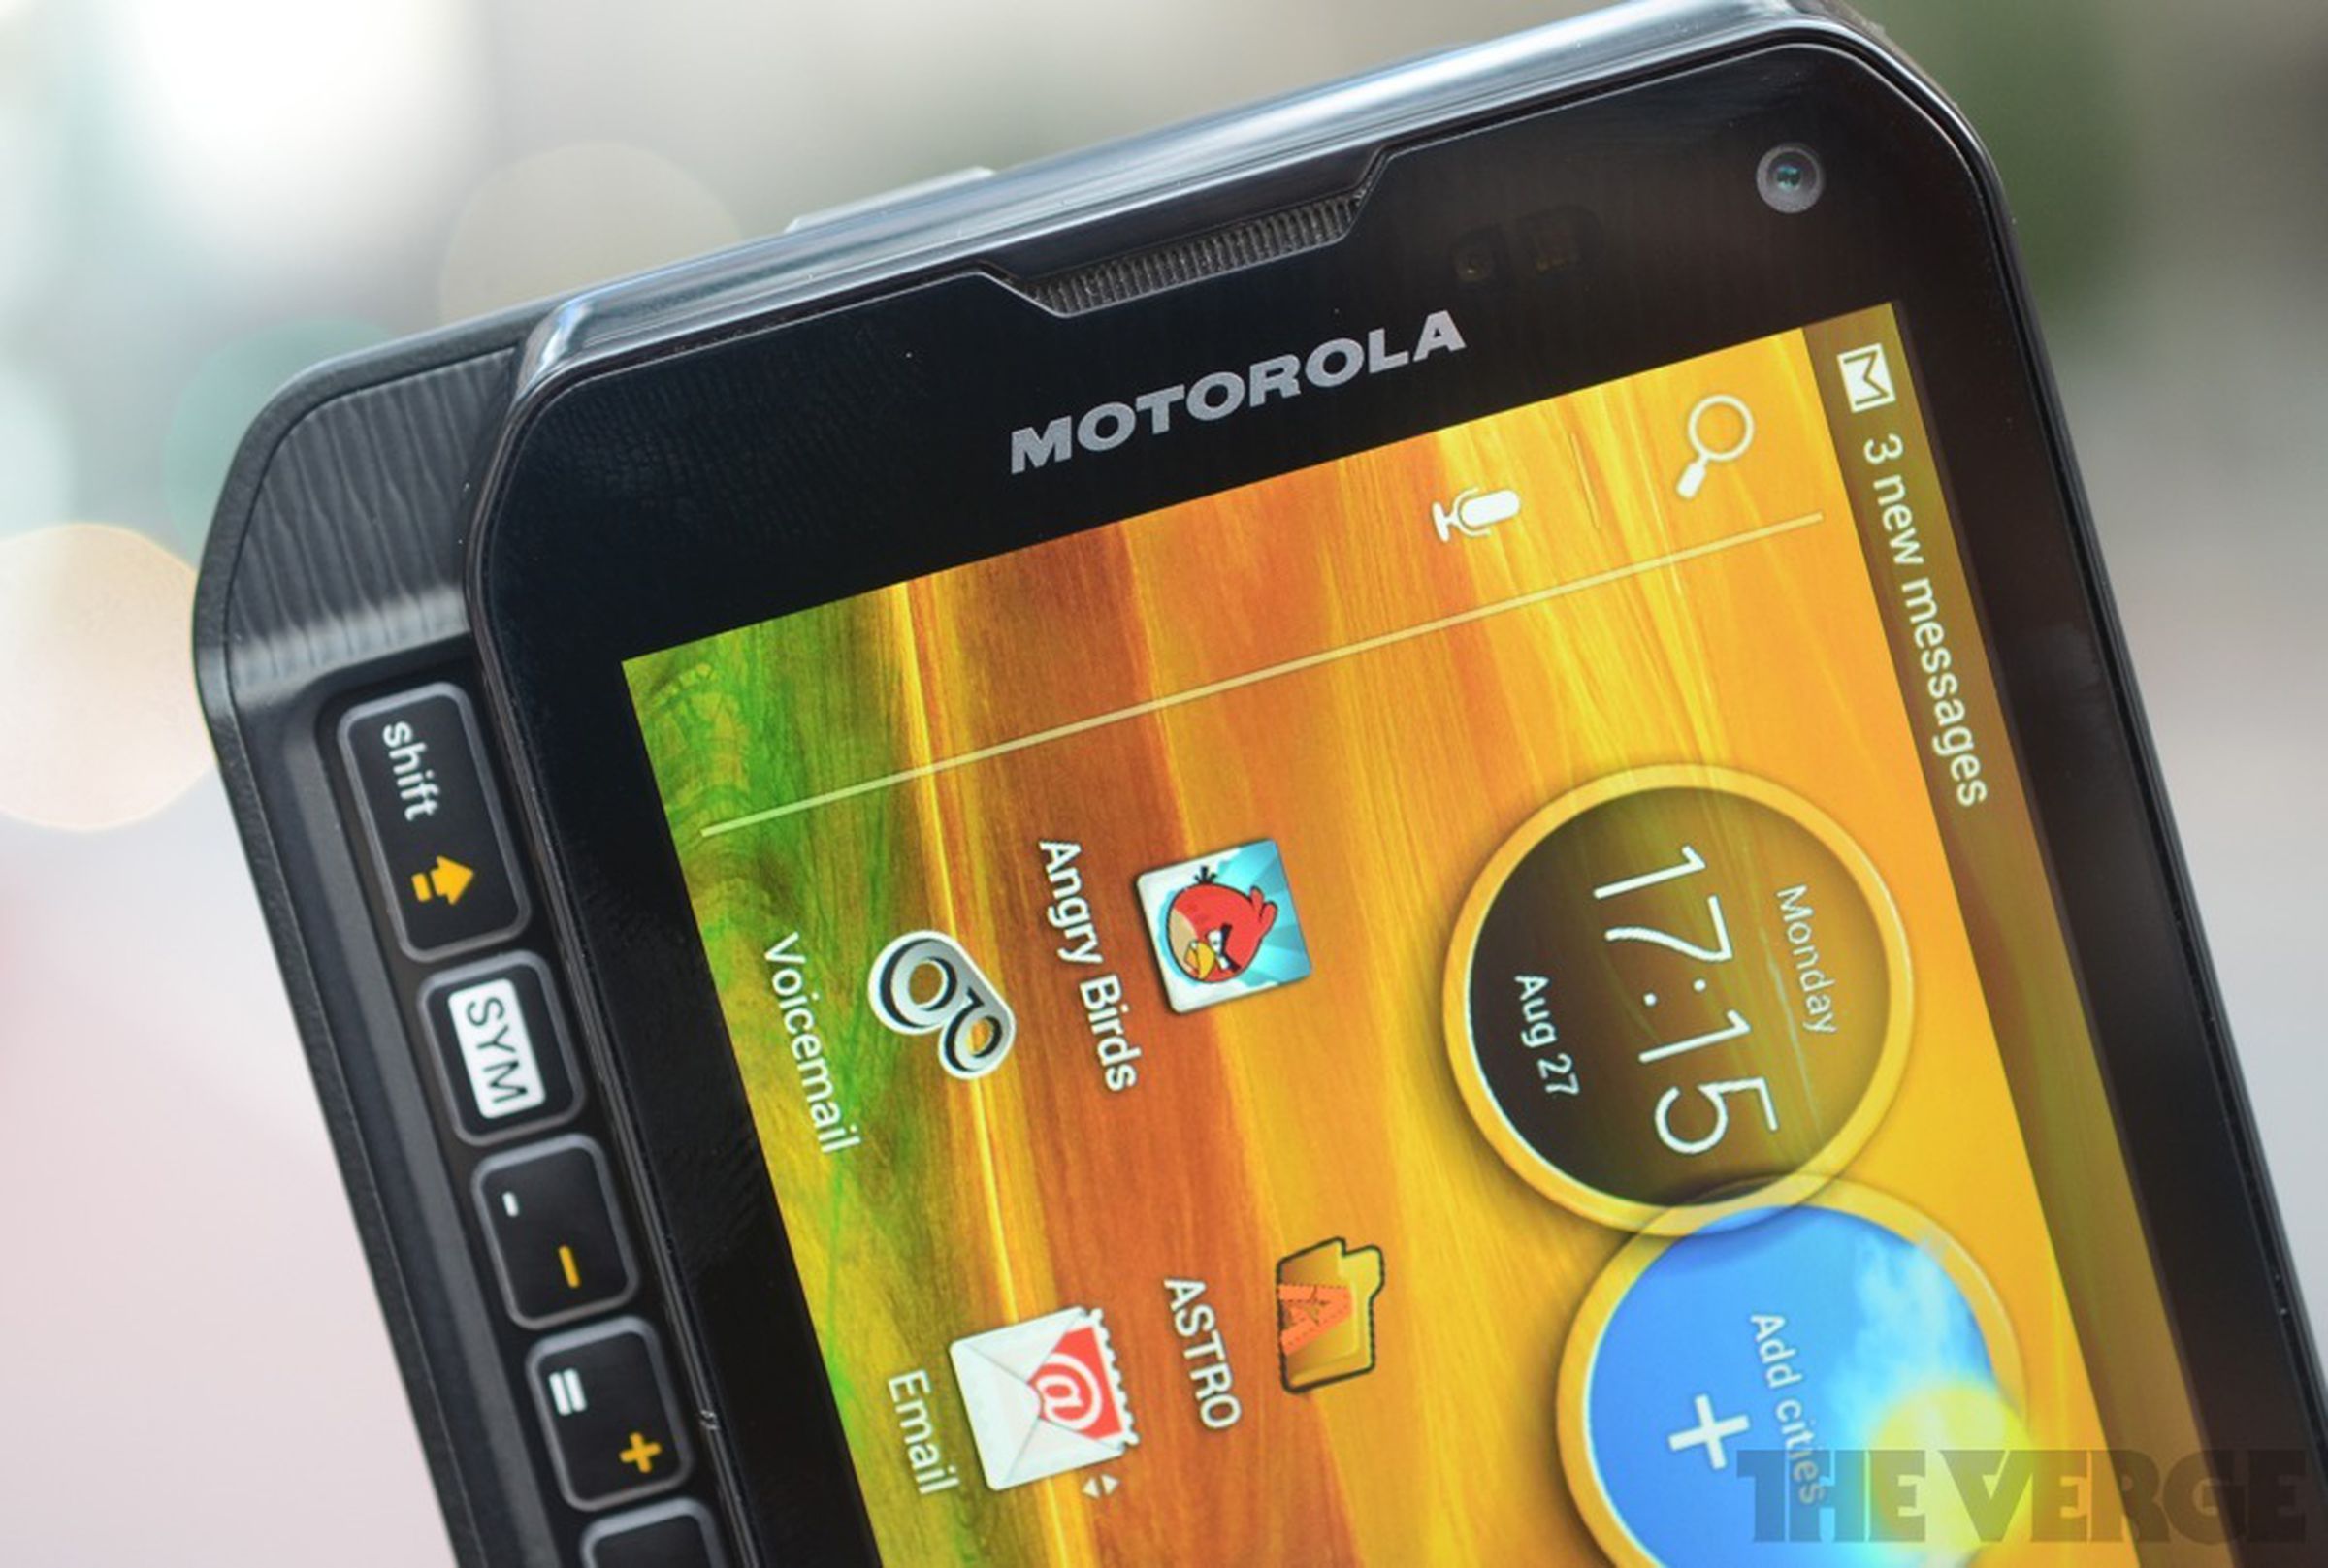 Motorola Photon Q 4G LTE review pictures